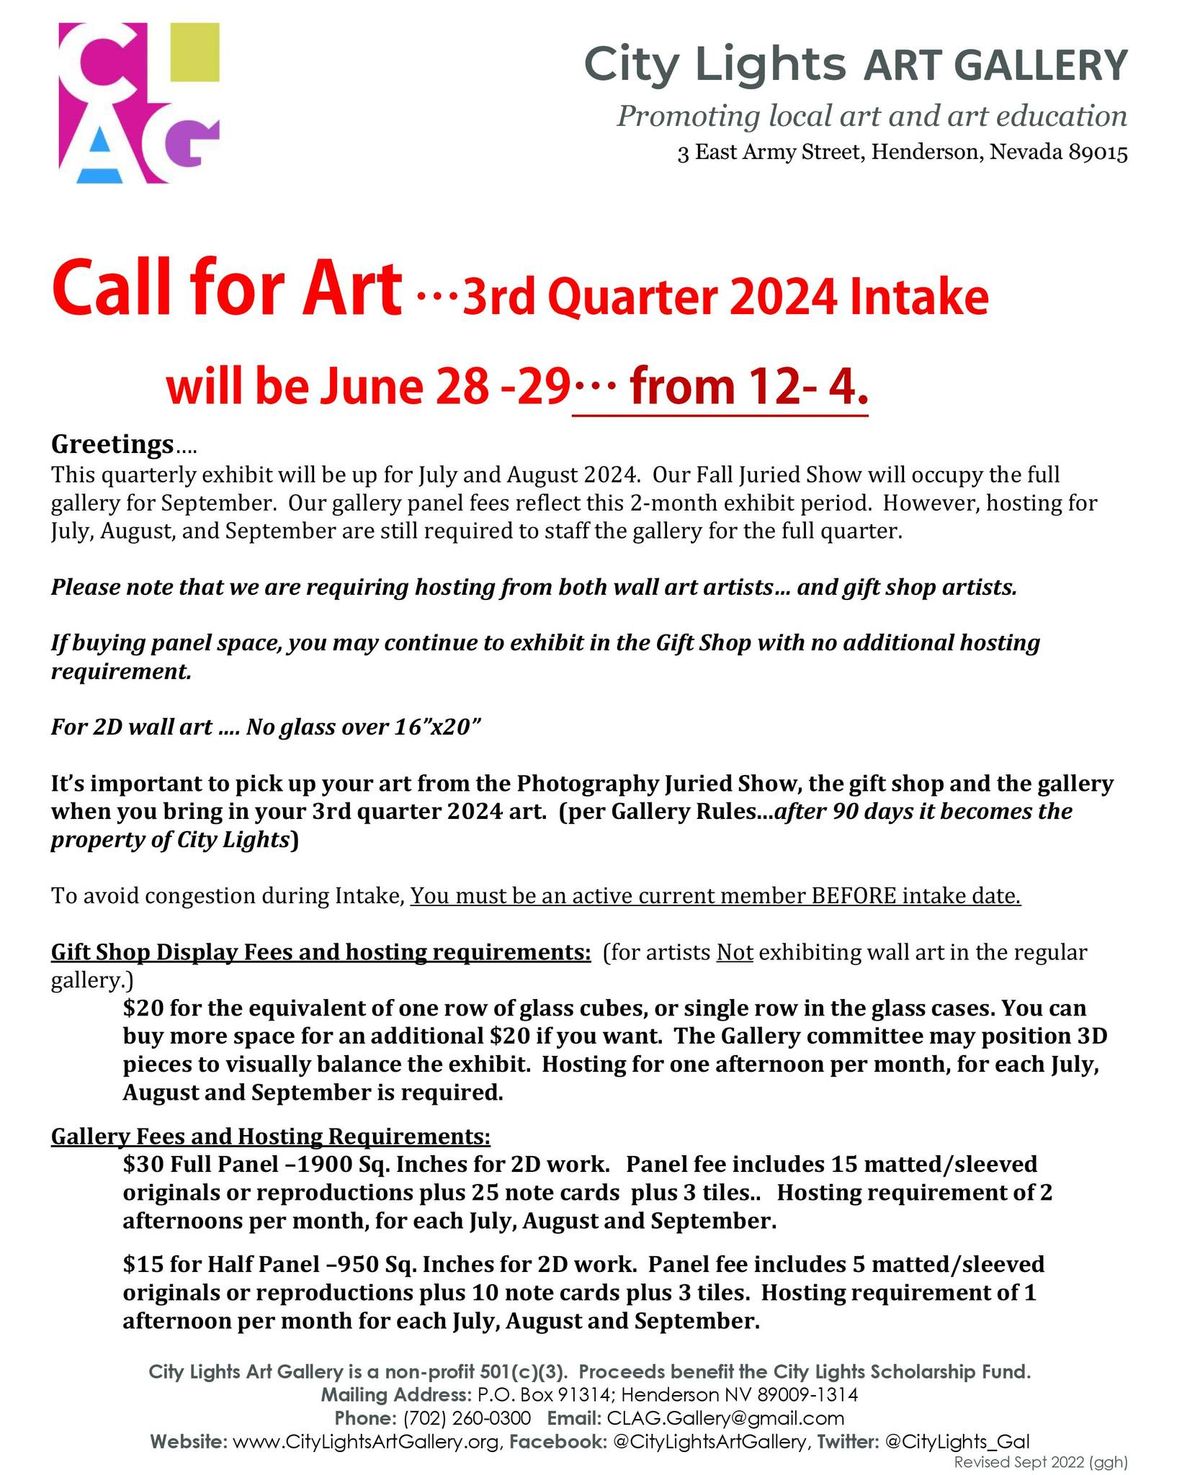 Call for Art 3rd Quarter 2024